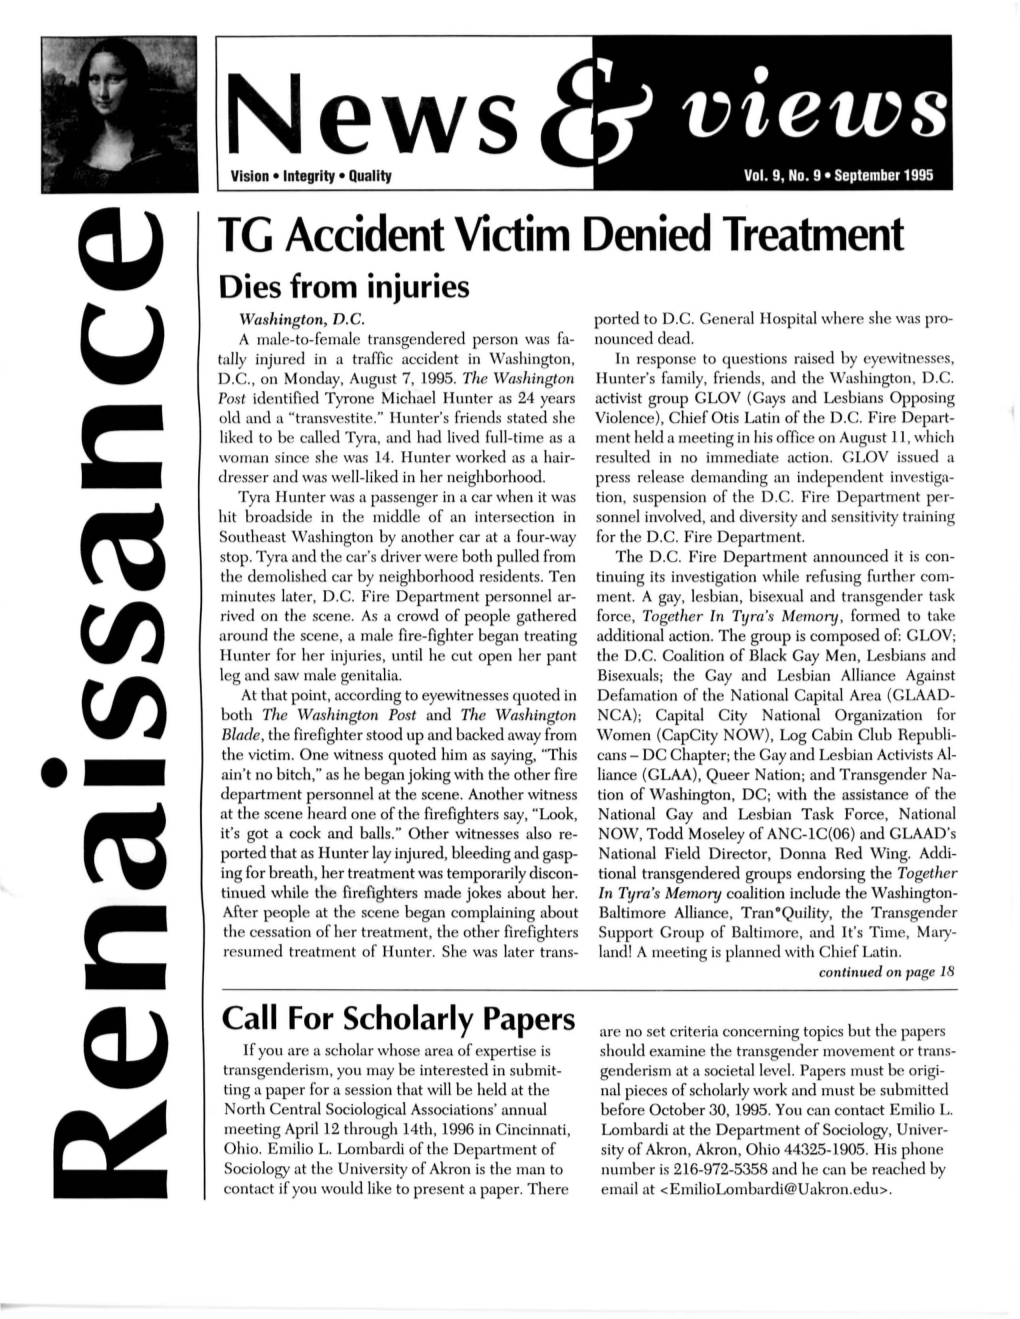 TG Accident Victim Denied Treatment Dies from Injuries Washington, D.C